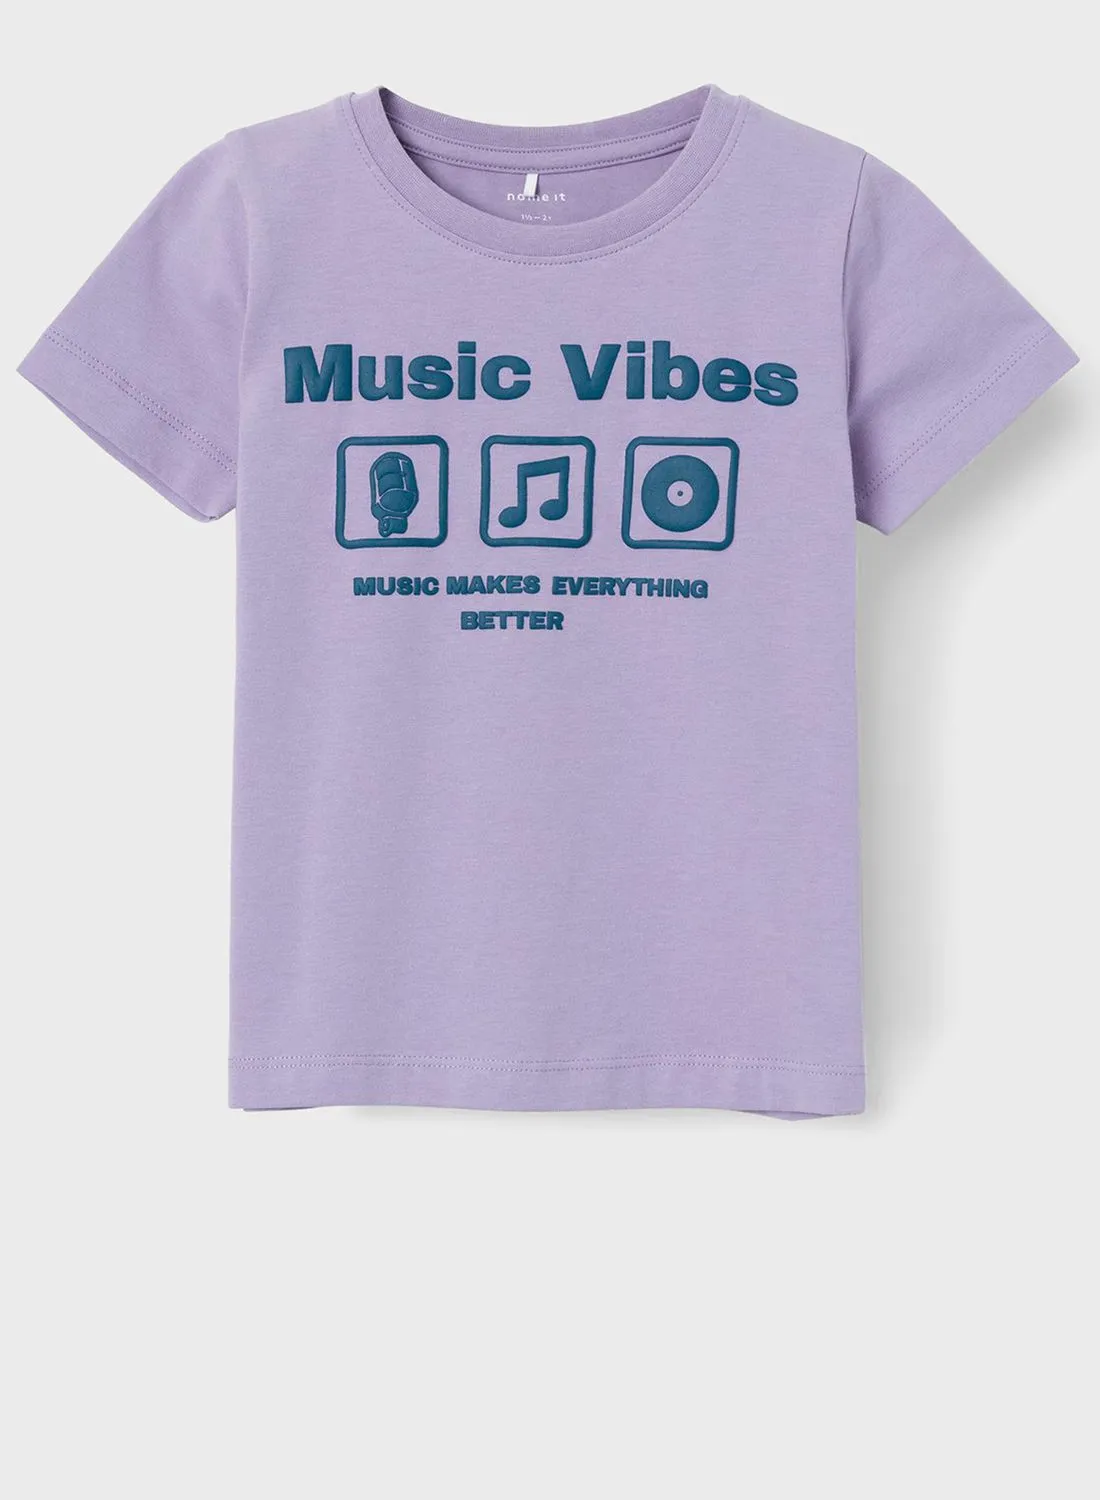 NAME IT Kids Music Vibes Crew Neck T-Shirt